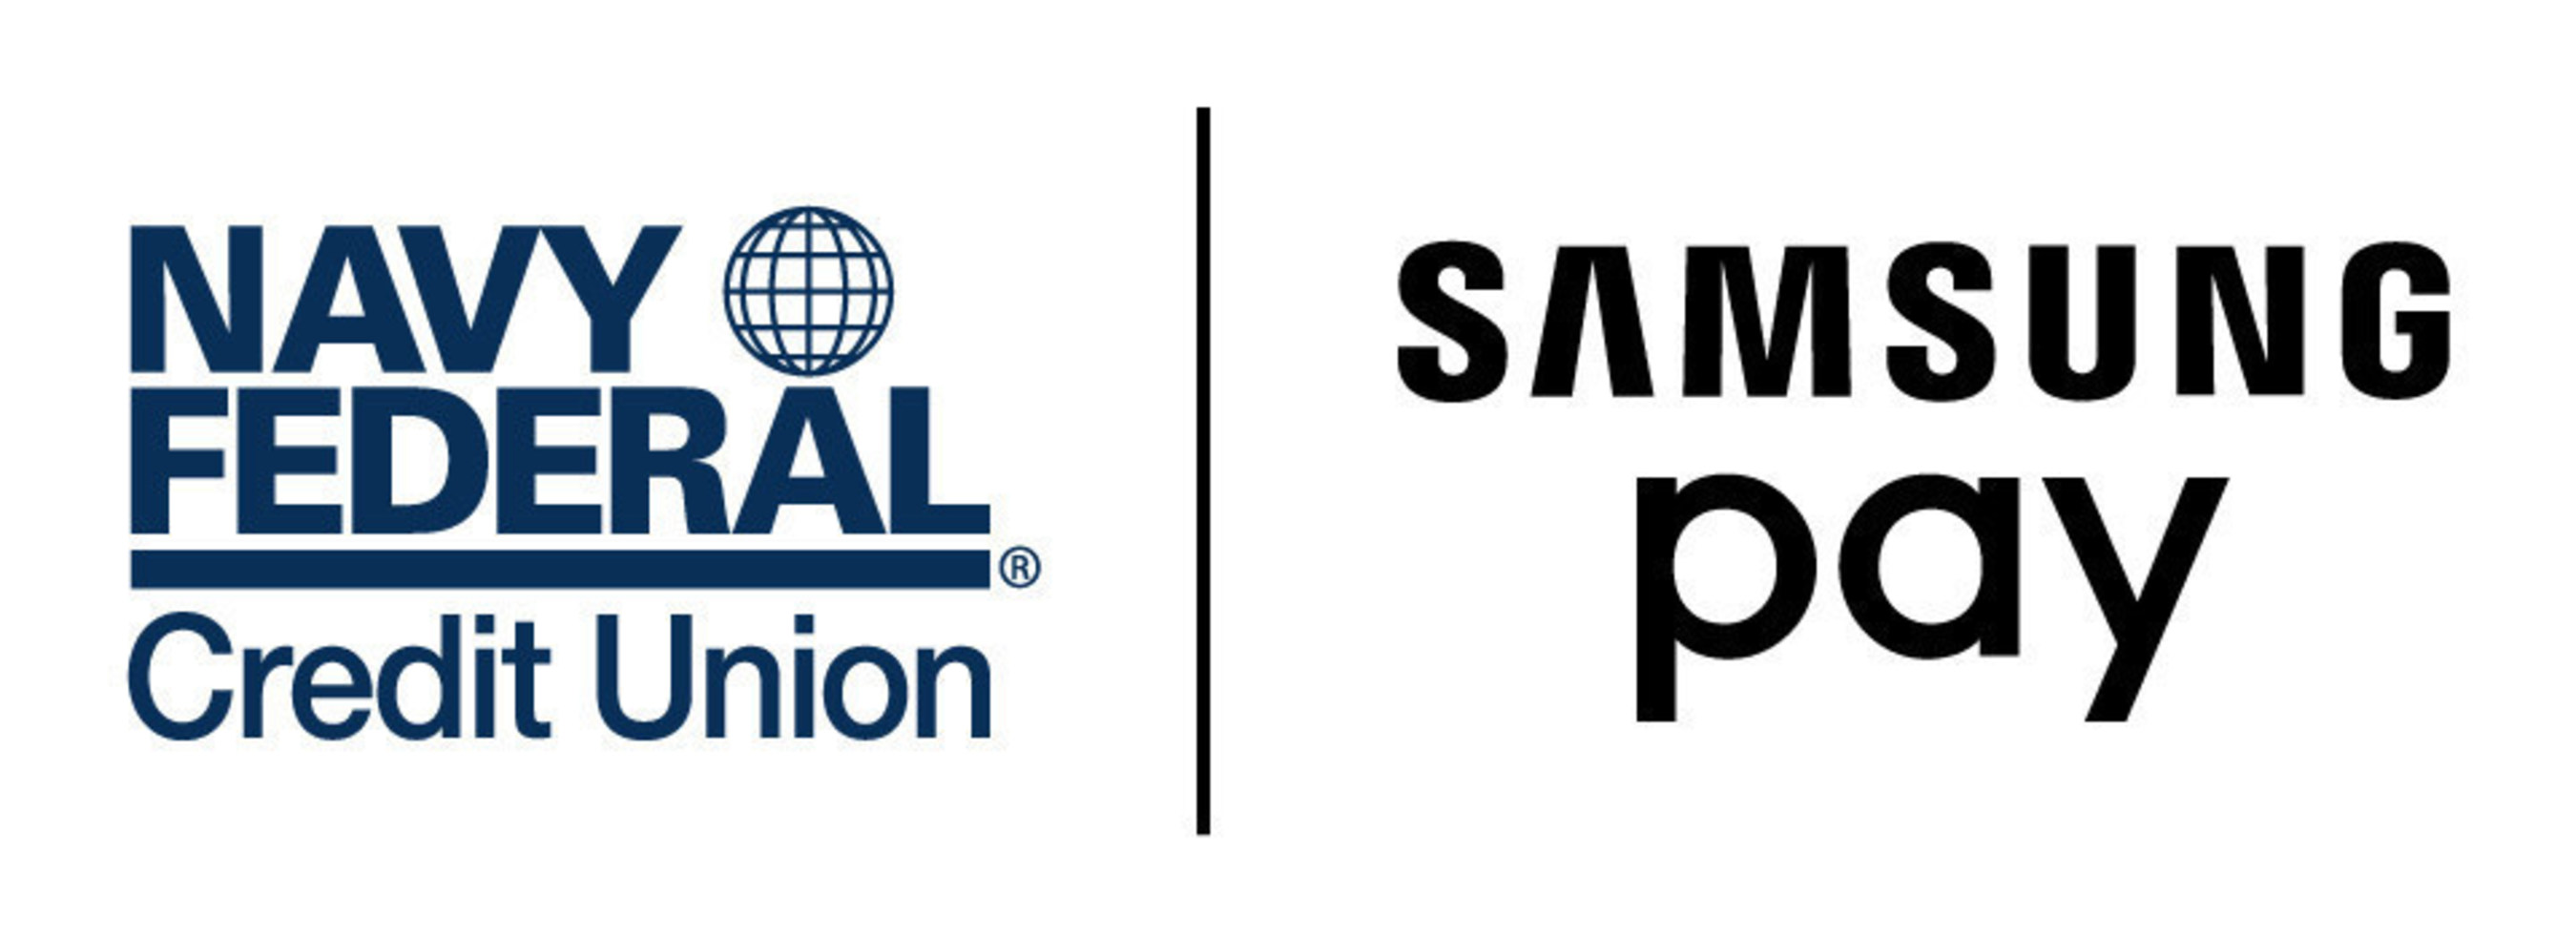 Navy Federal Credit Union/Samsung Pay Logo. (PRNewsFoto/Navy Federal Credit Union)